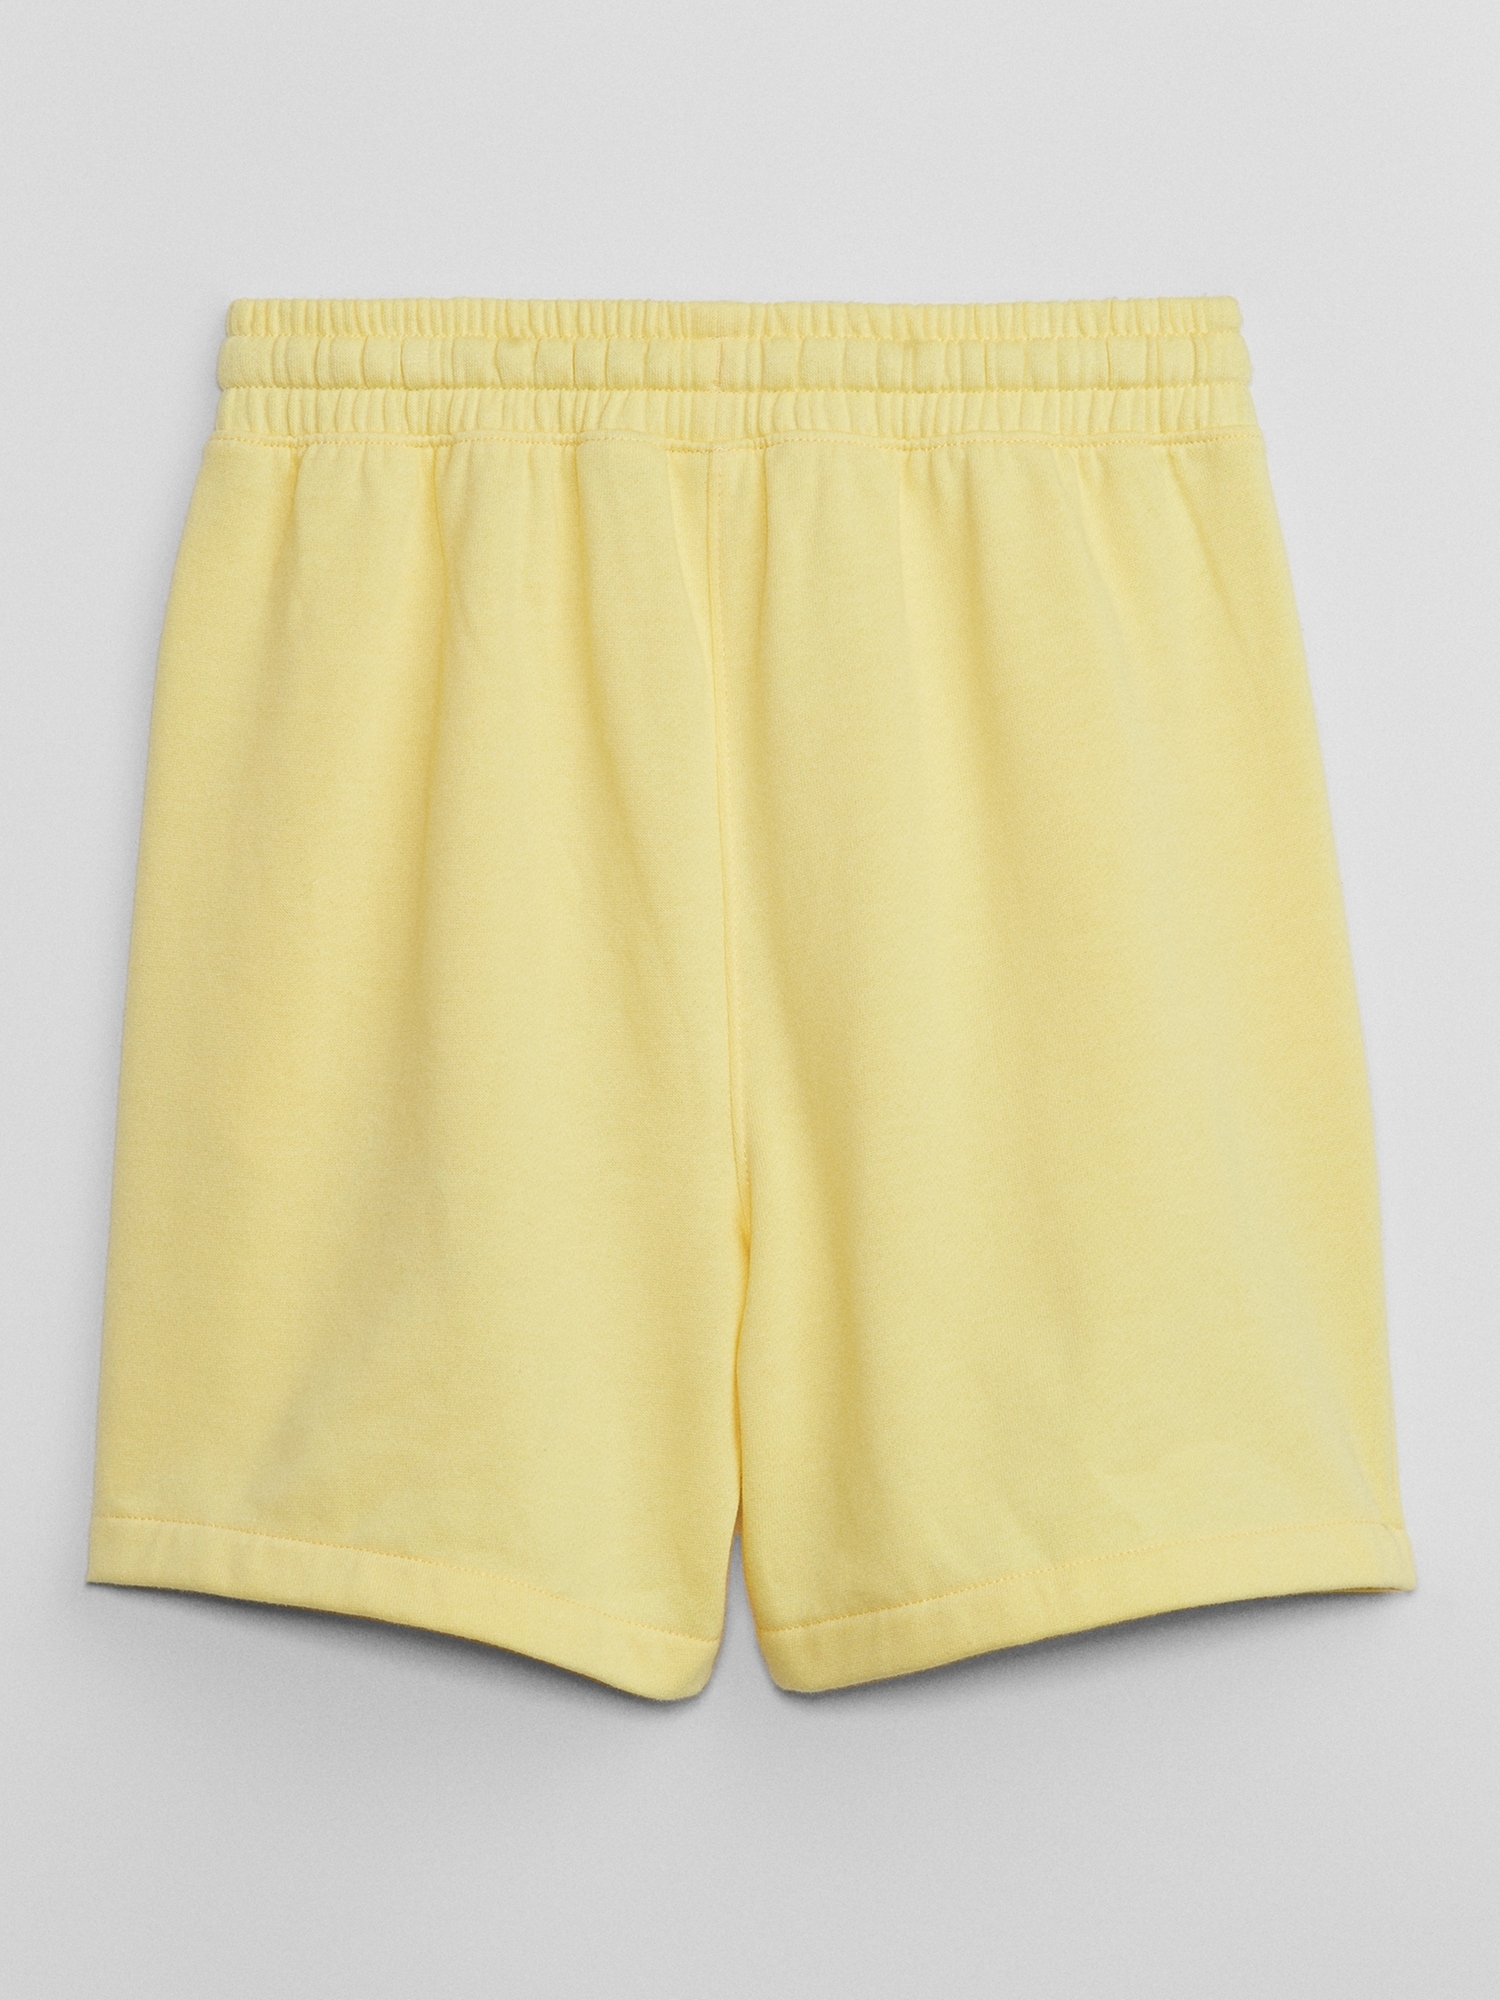 Kids Fleece Pull-On Shorts | Gap Factory